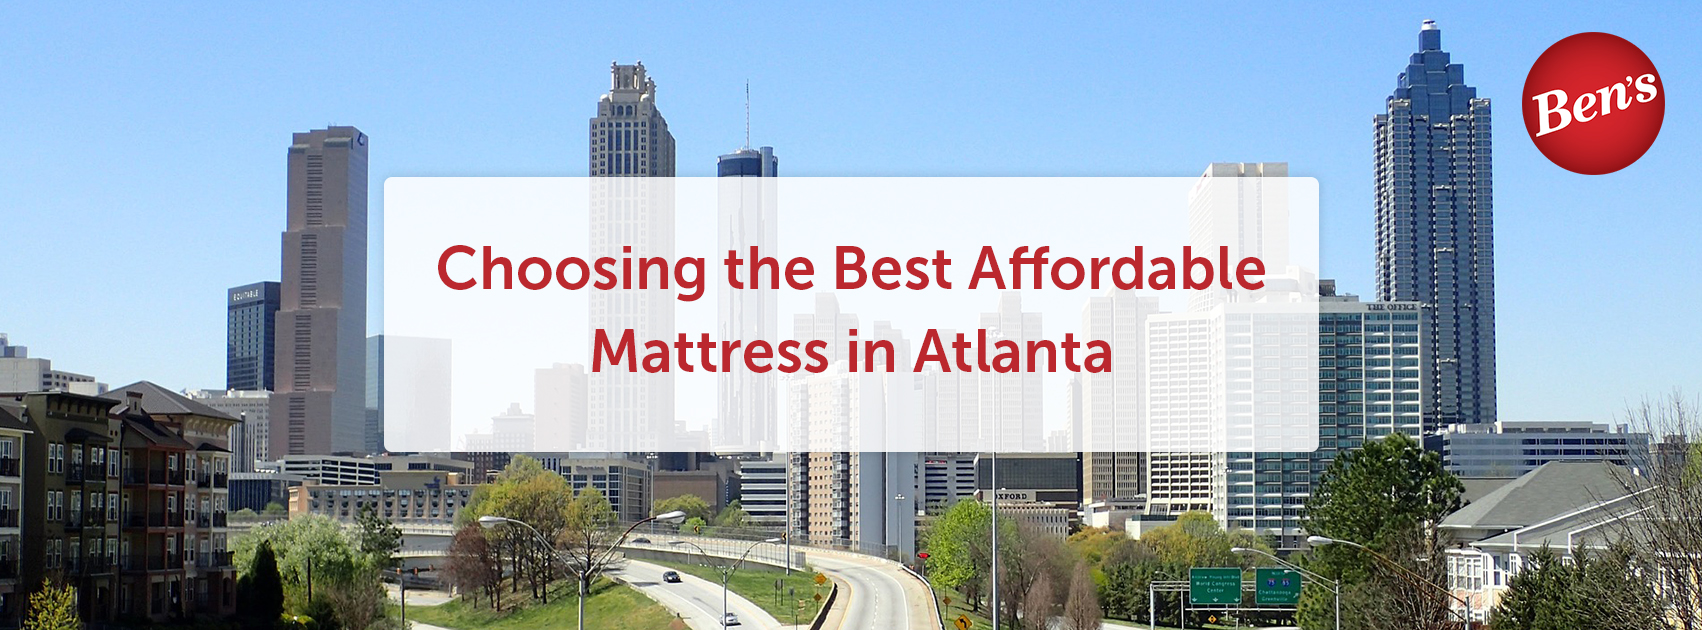 Choosing the Best Affordable Mattress in Atlanta